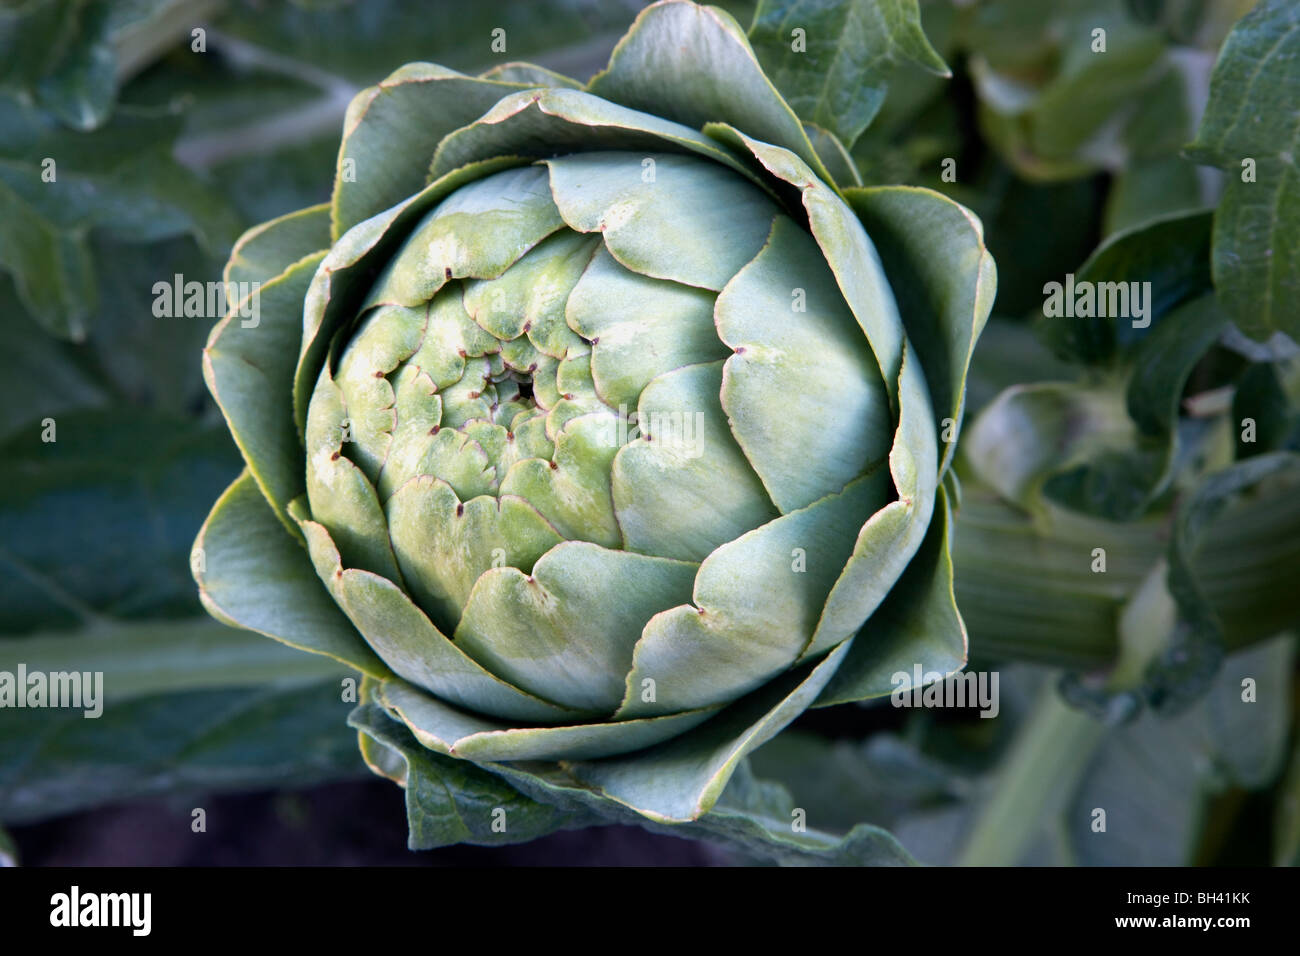 Artichoke 'Globe' flower bud, on plant. Stock Photo